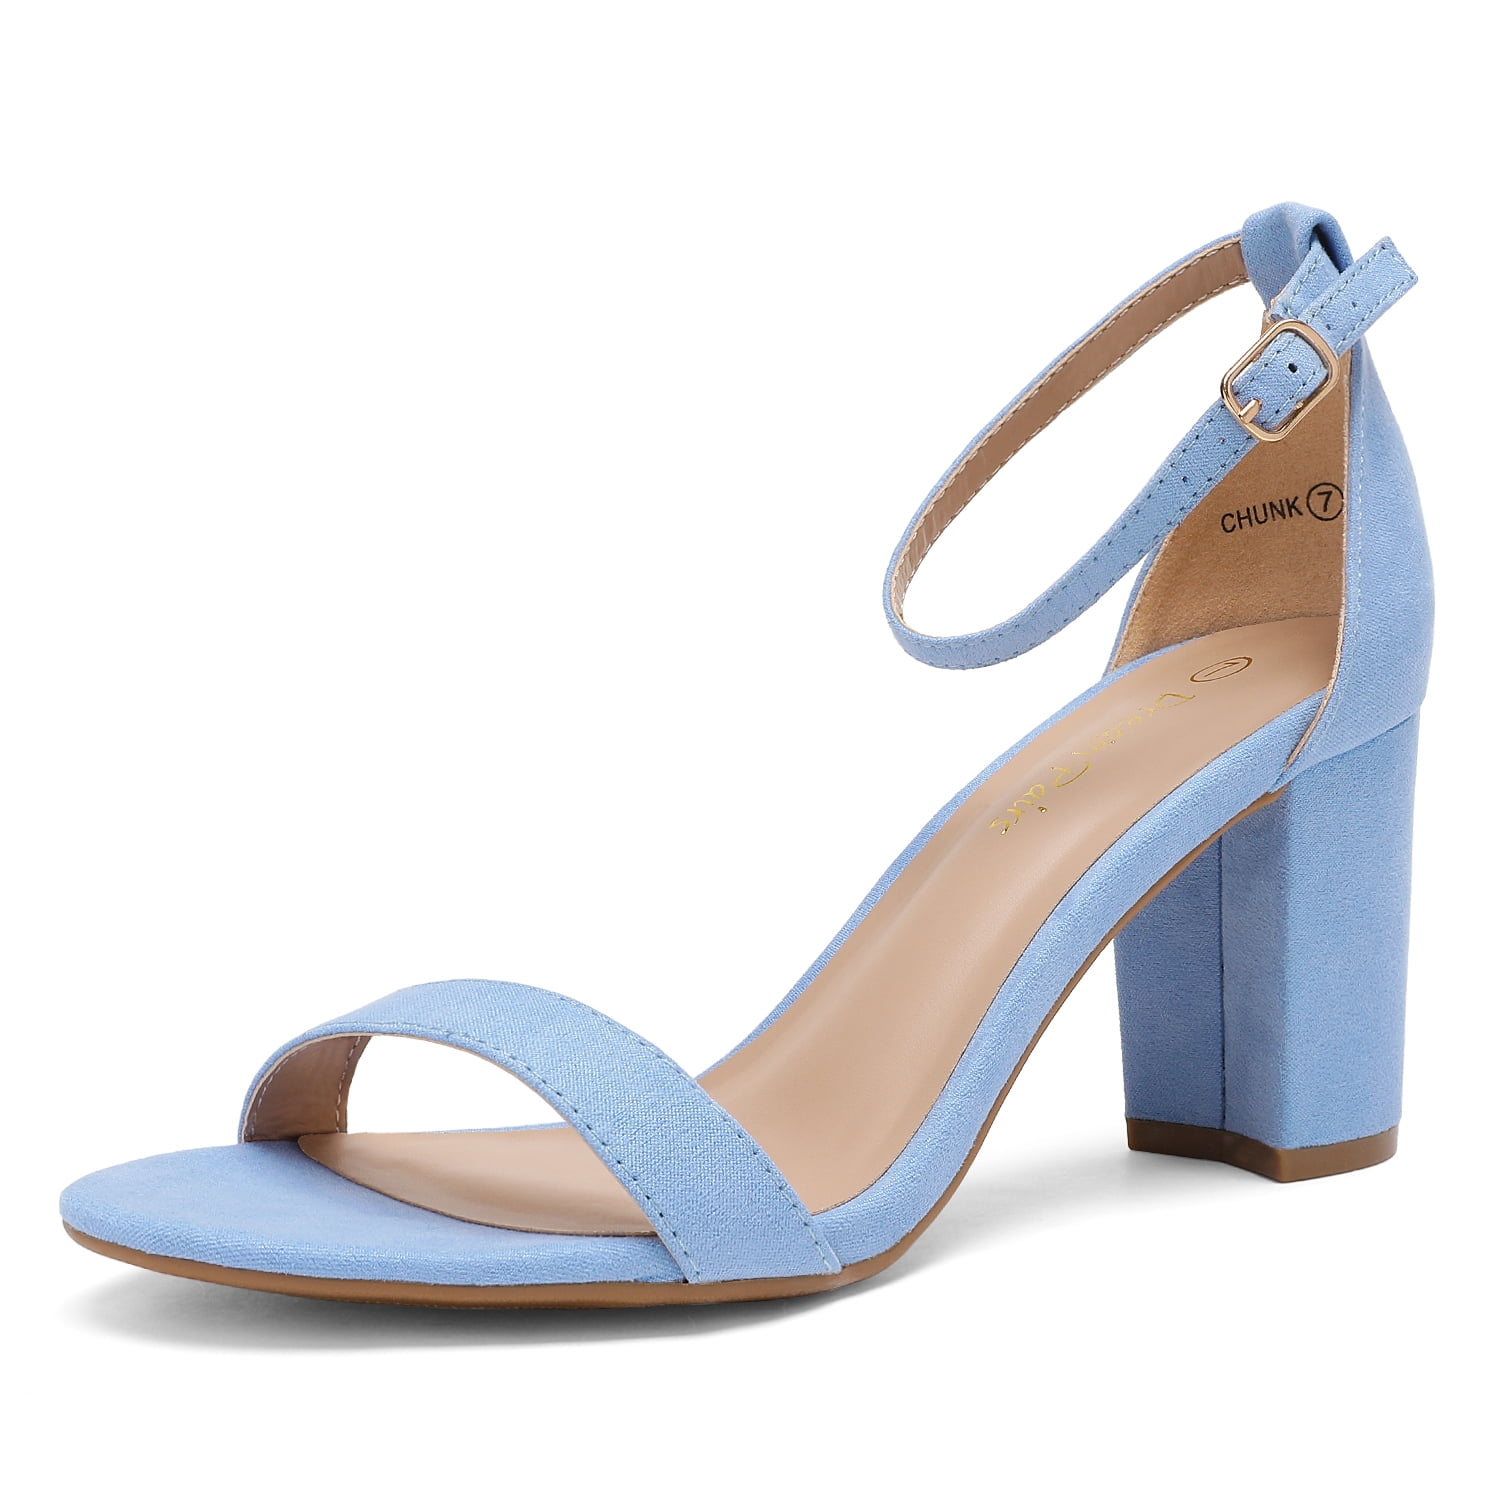 T-Strap Women Sandals Fashion Square High Heel Peep Toe Platform Shoes for Summer Woman,White,4 